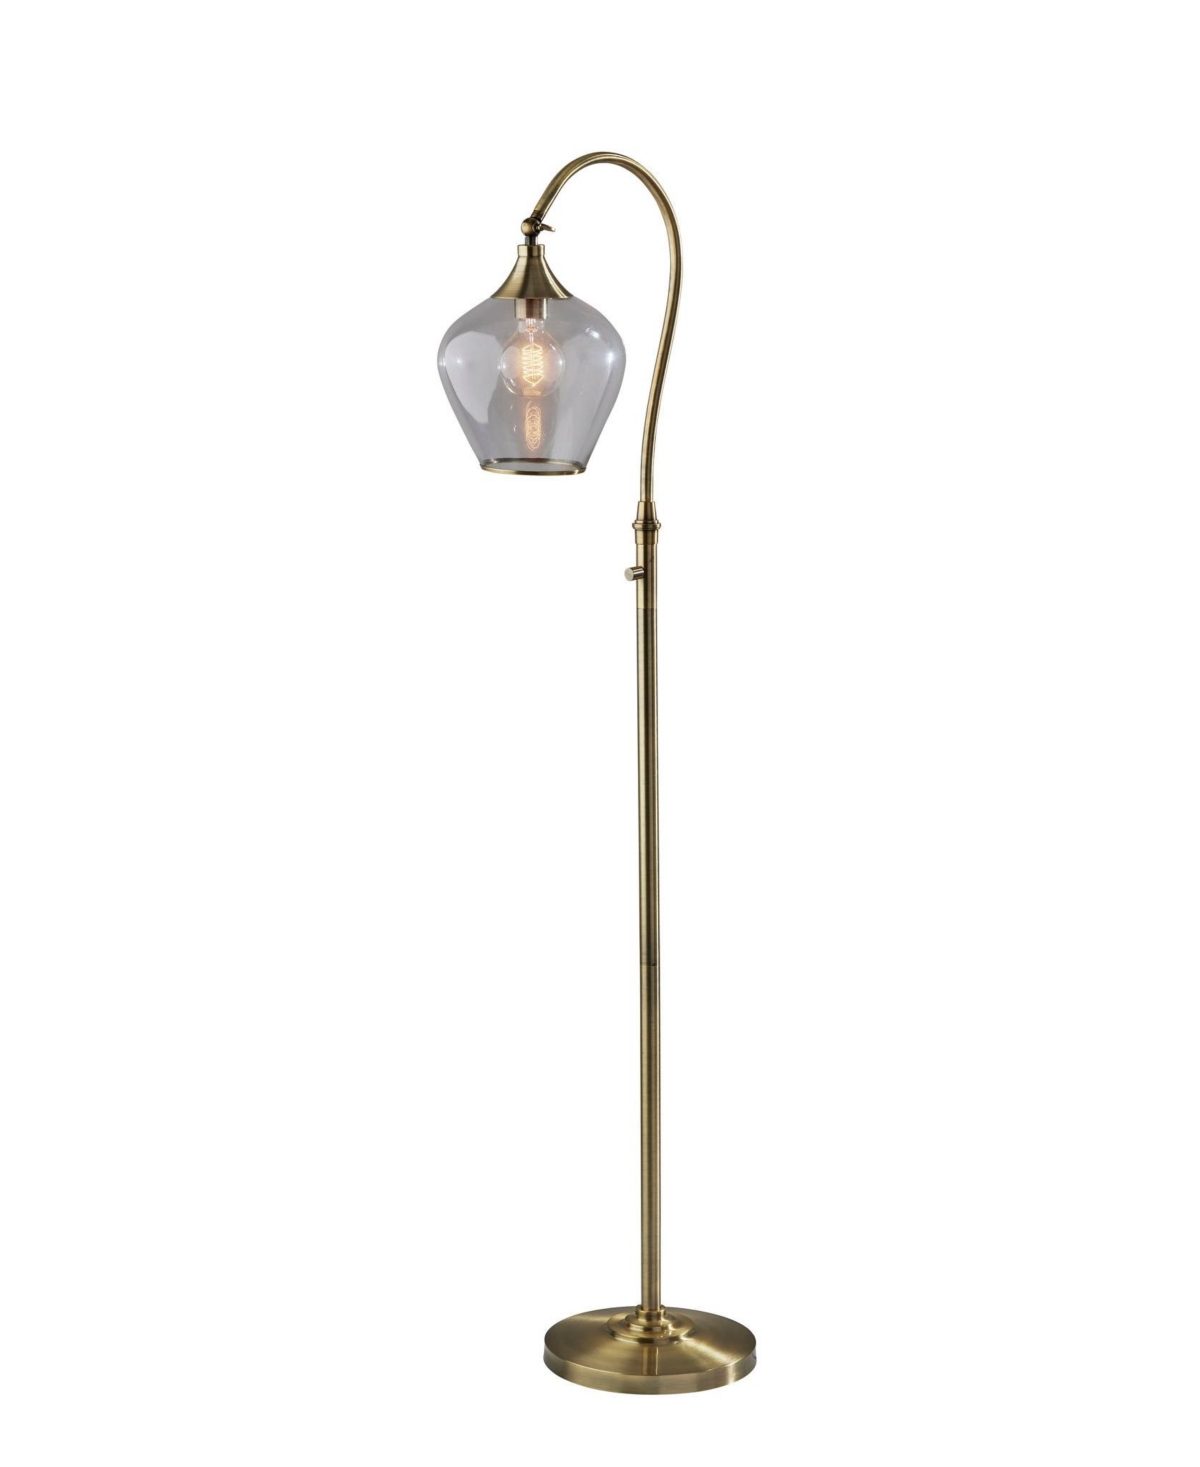 Adesso Bradford Floor Lamp In Antique-like Brass